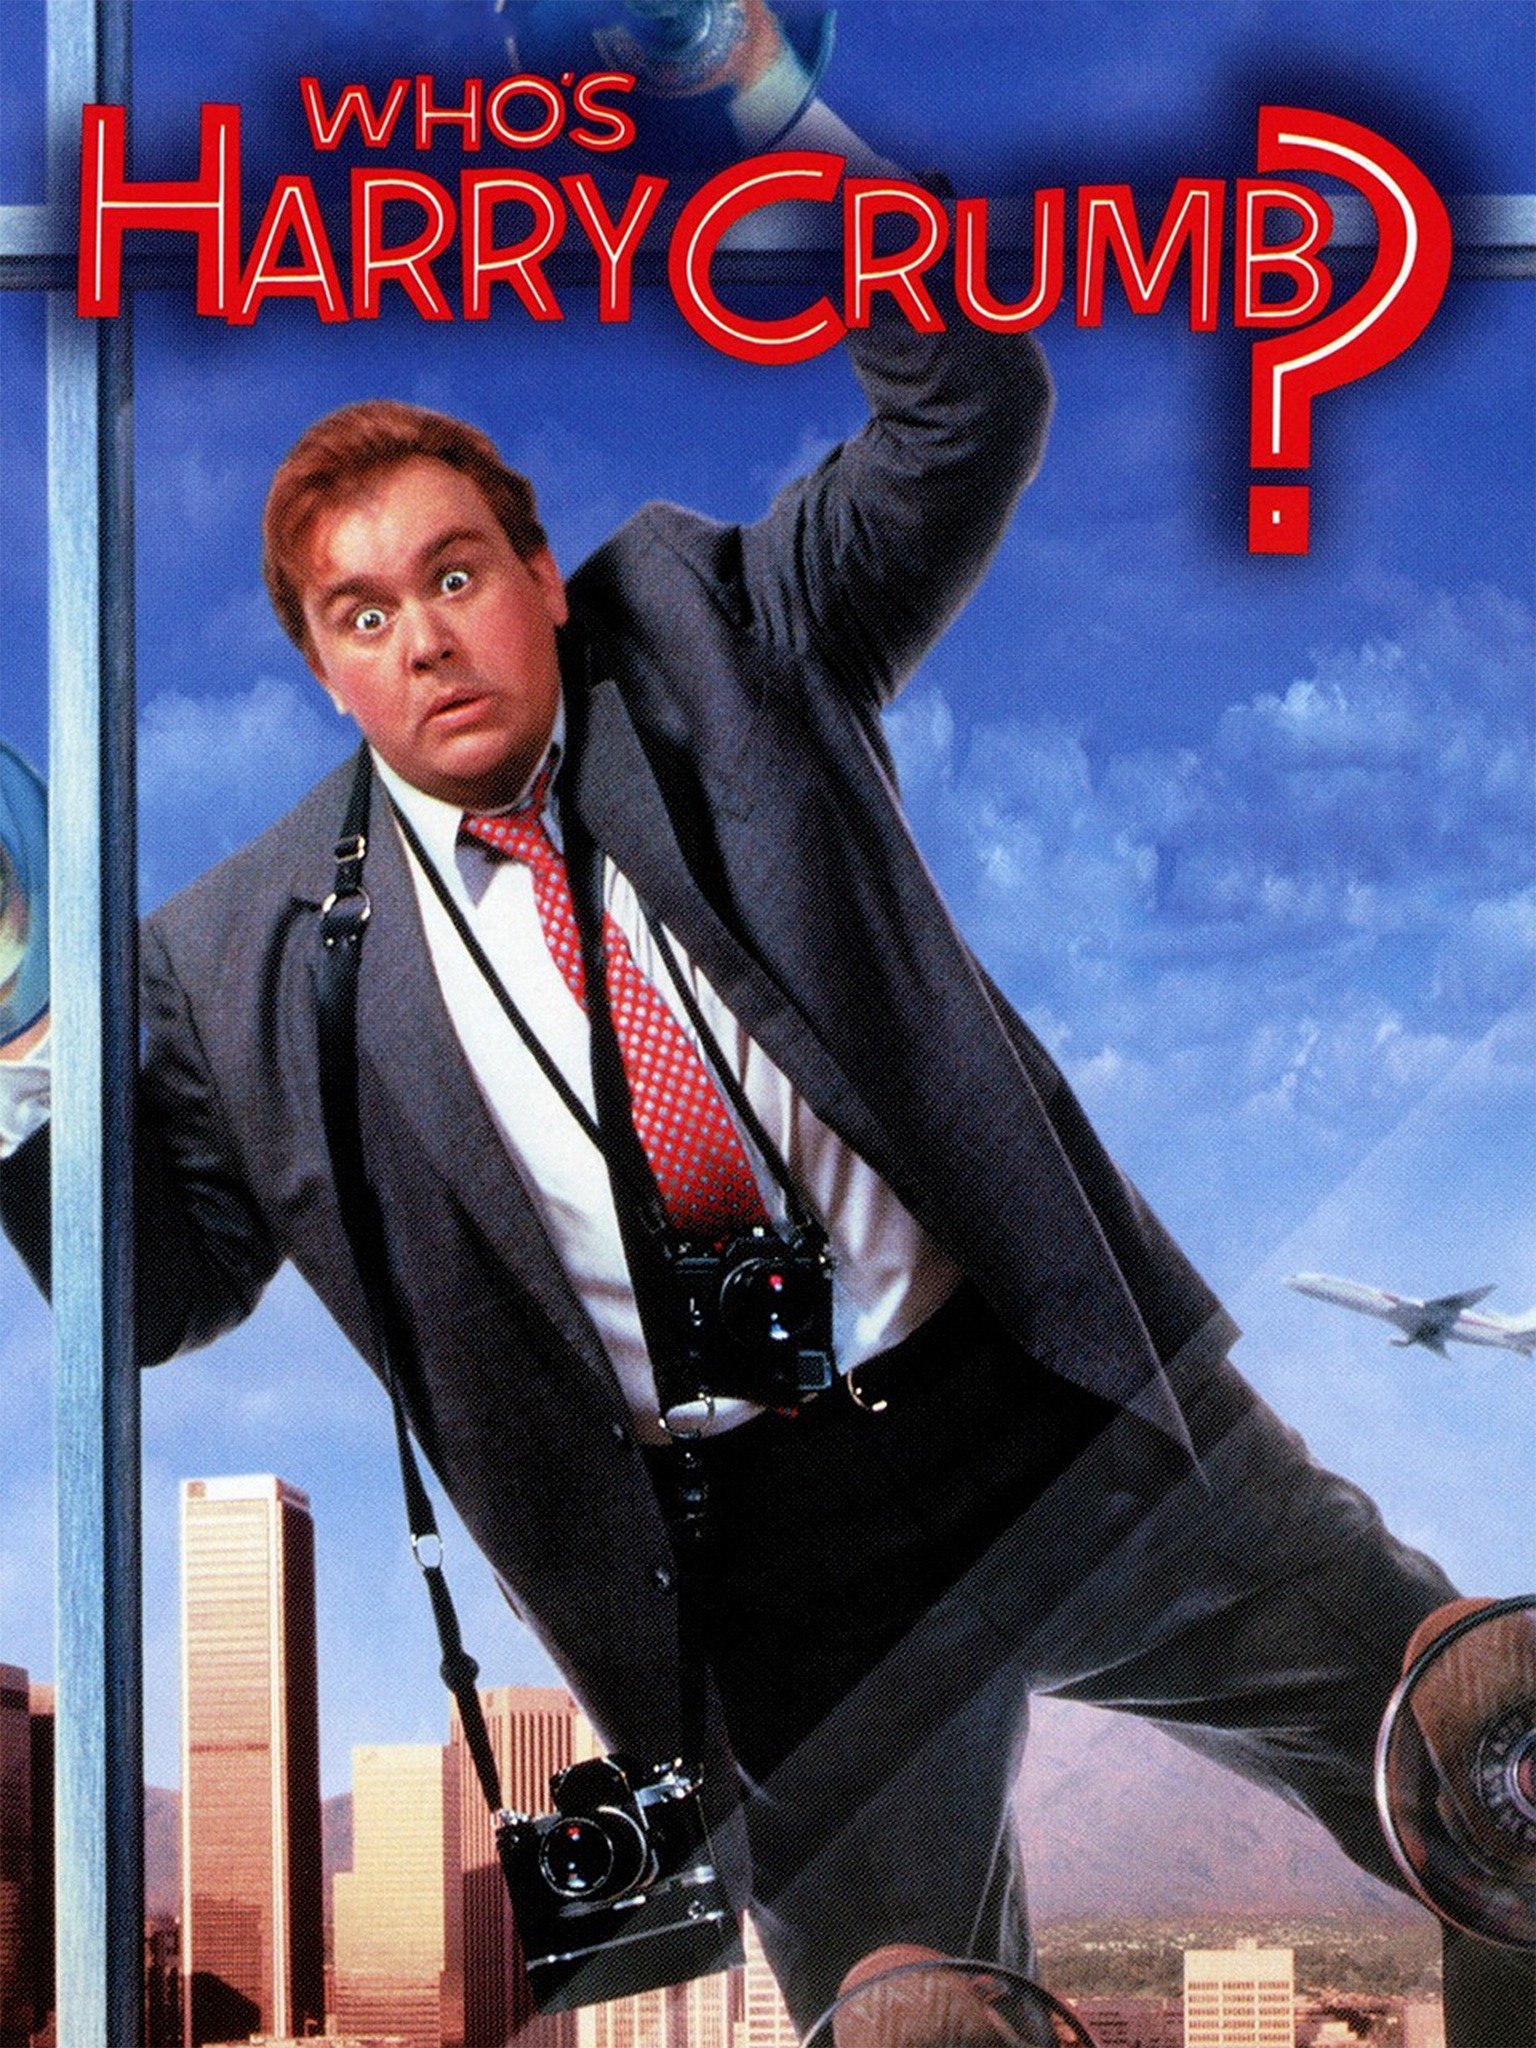 harry crumb full movie